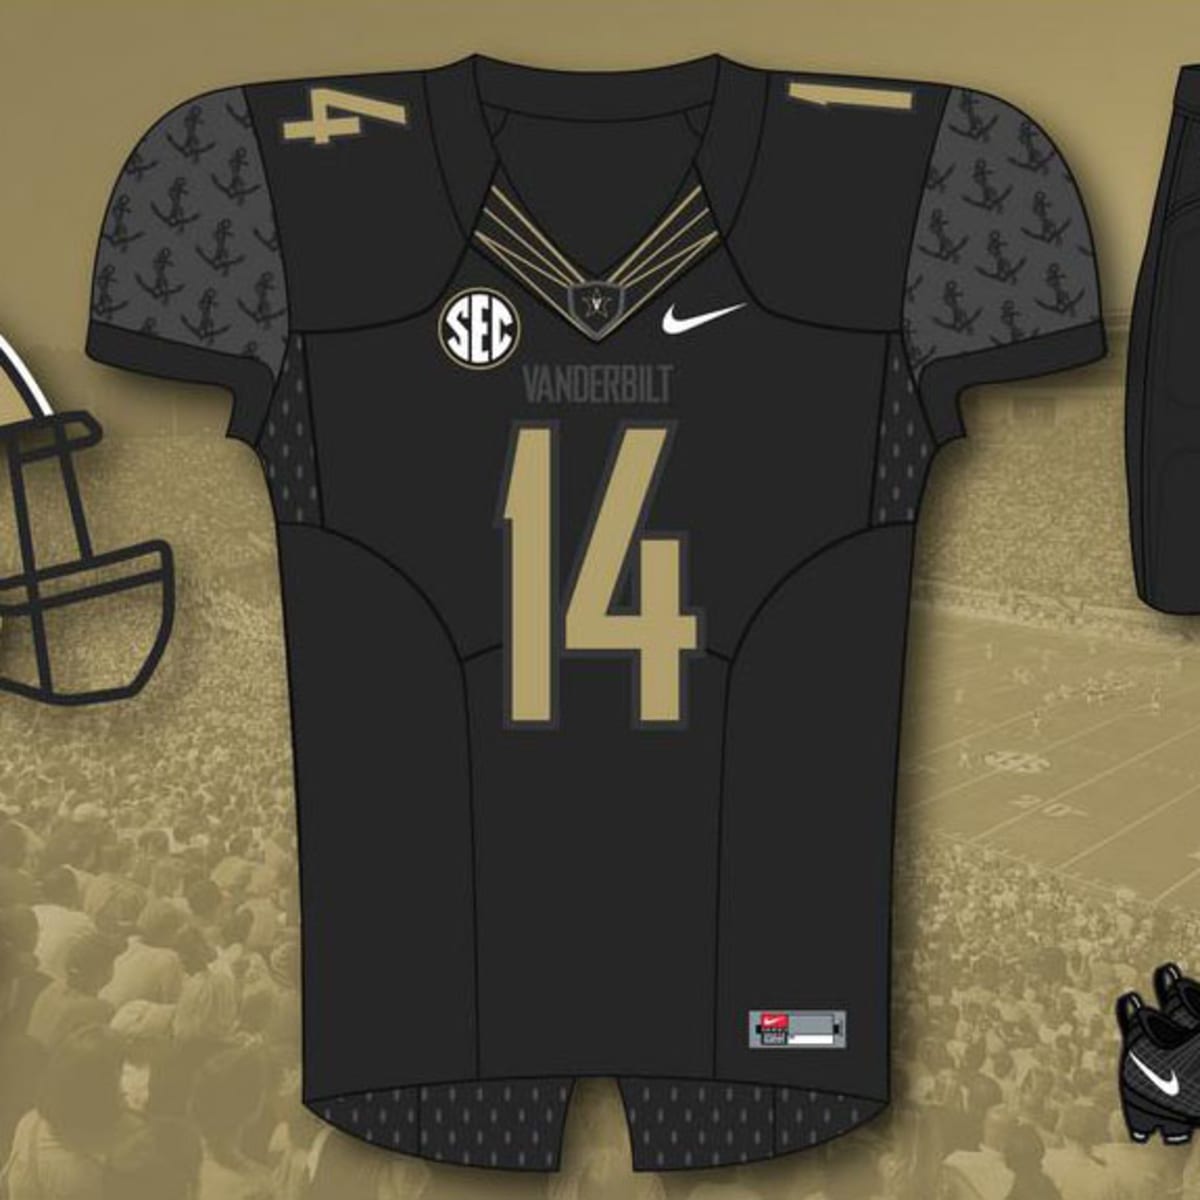 Vanderbilt Shows Off Their New Uniform Combinations – SportsLogos